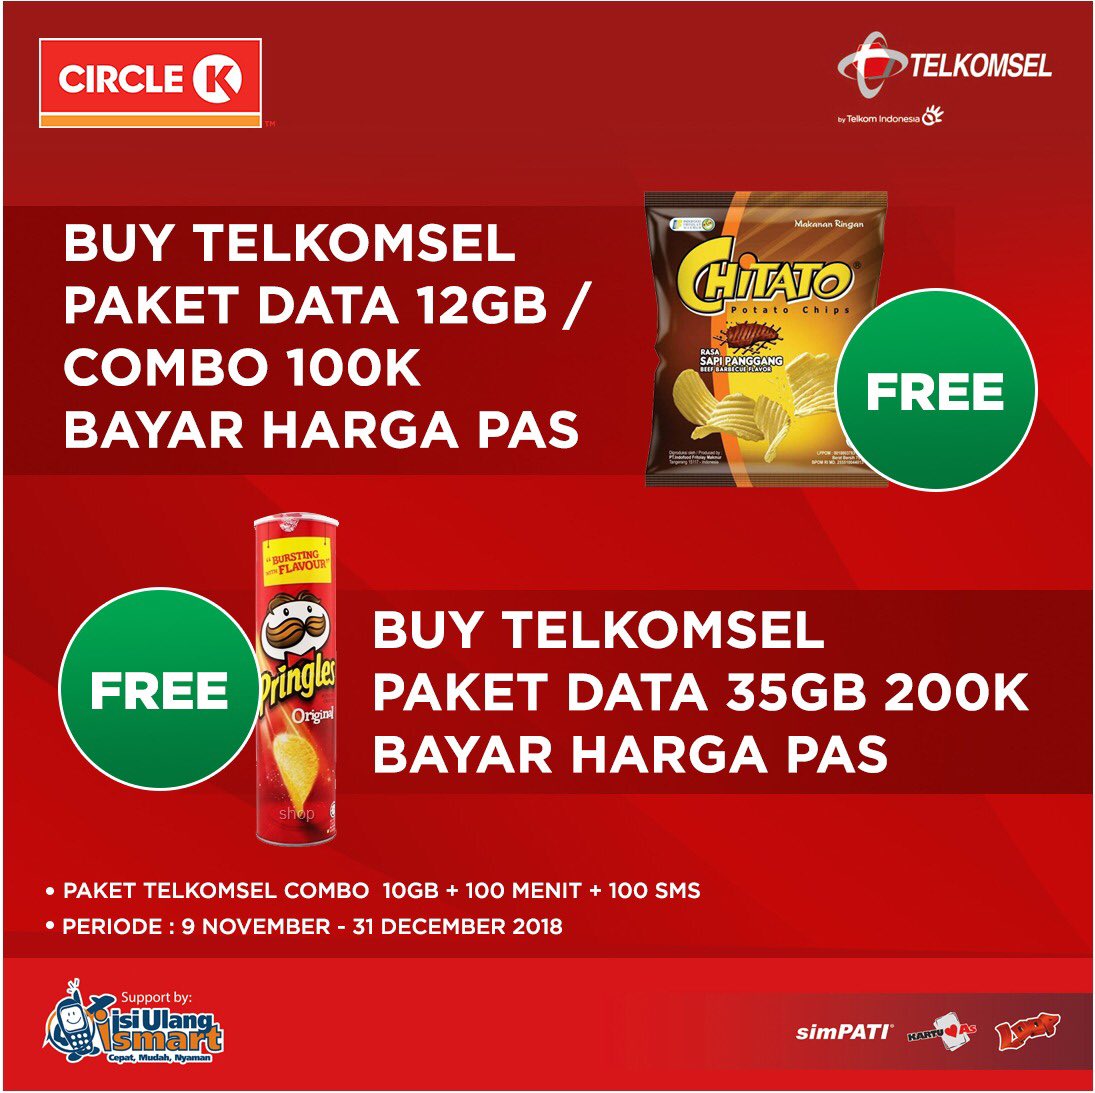 CircleK - Promo Beli Paket Data Telkomsel Gratis Chitato atau Pringless (s.d 31 Des 2018)